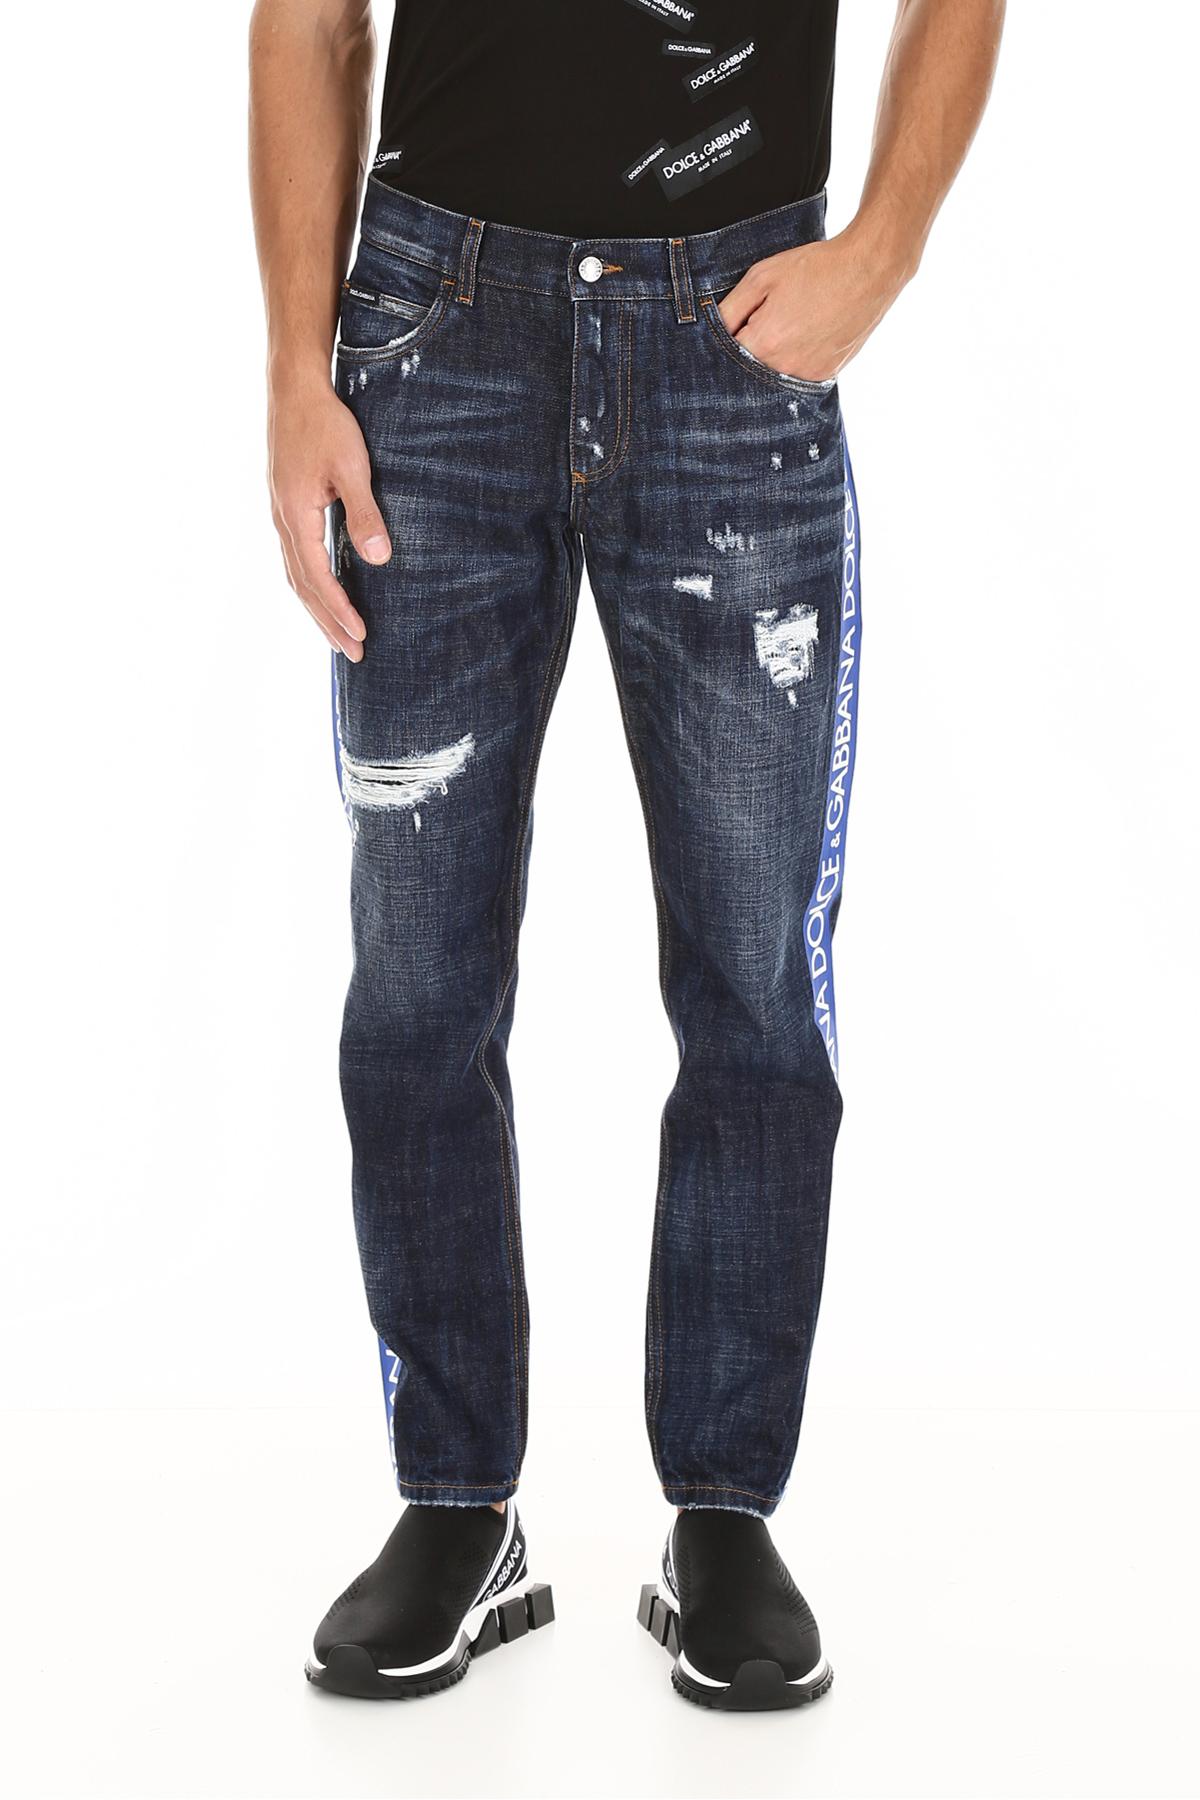 Dolce & Gabbana Denim Jeans With Side Logo Bands in Blue for Men - Lyst